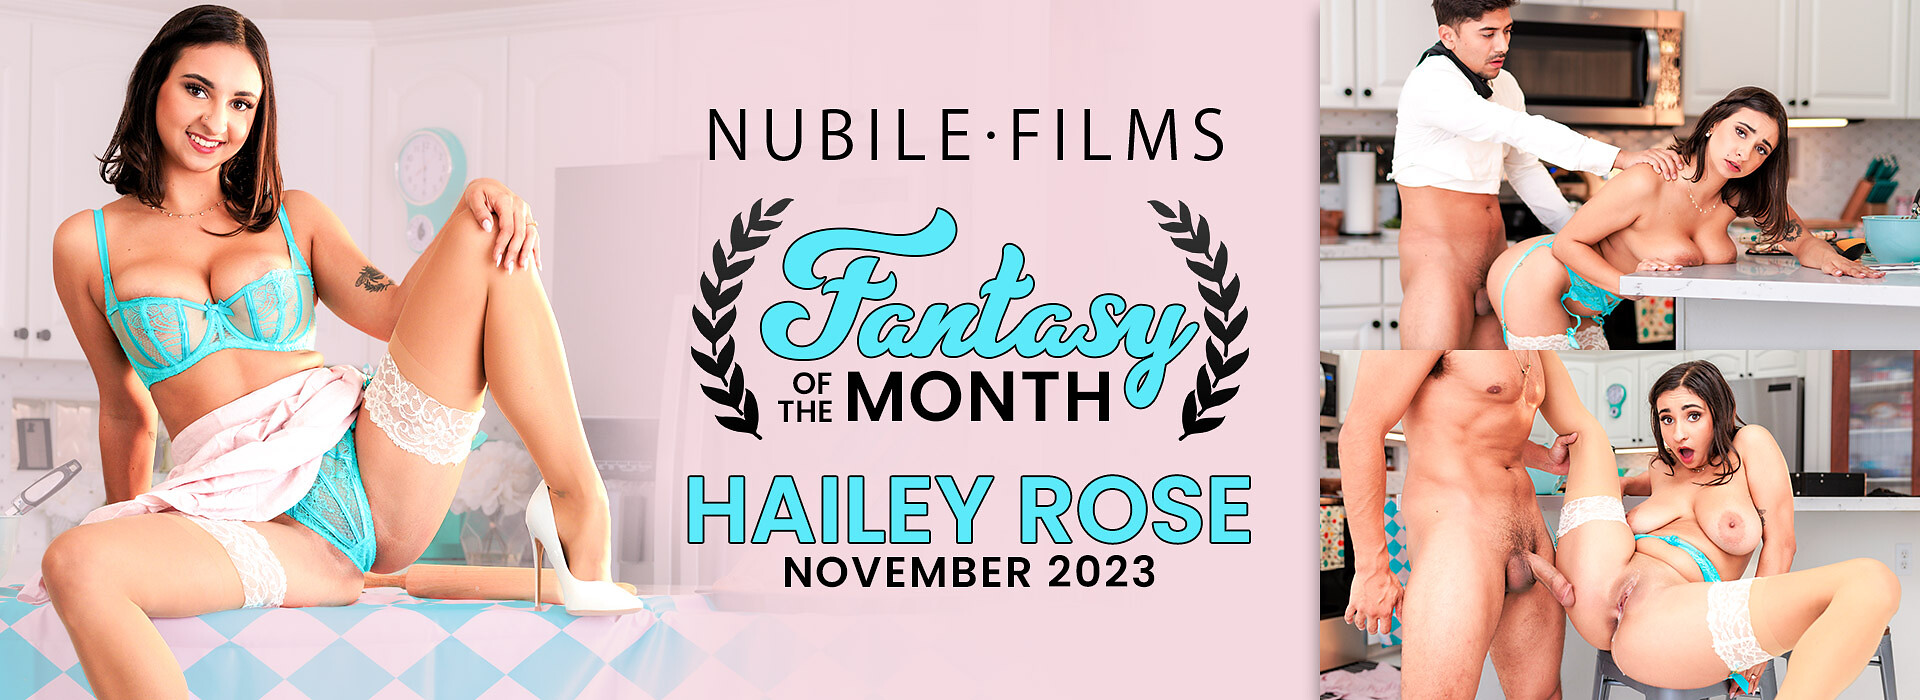 Nubilfilms - Nubile Films - Capturing the Essence of Sensuality